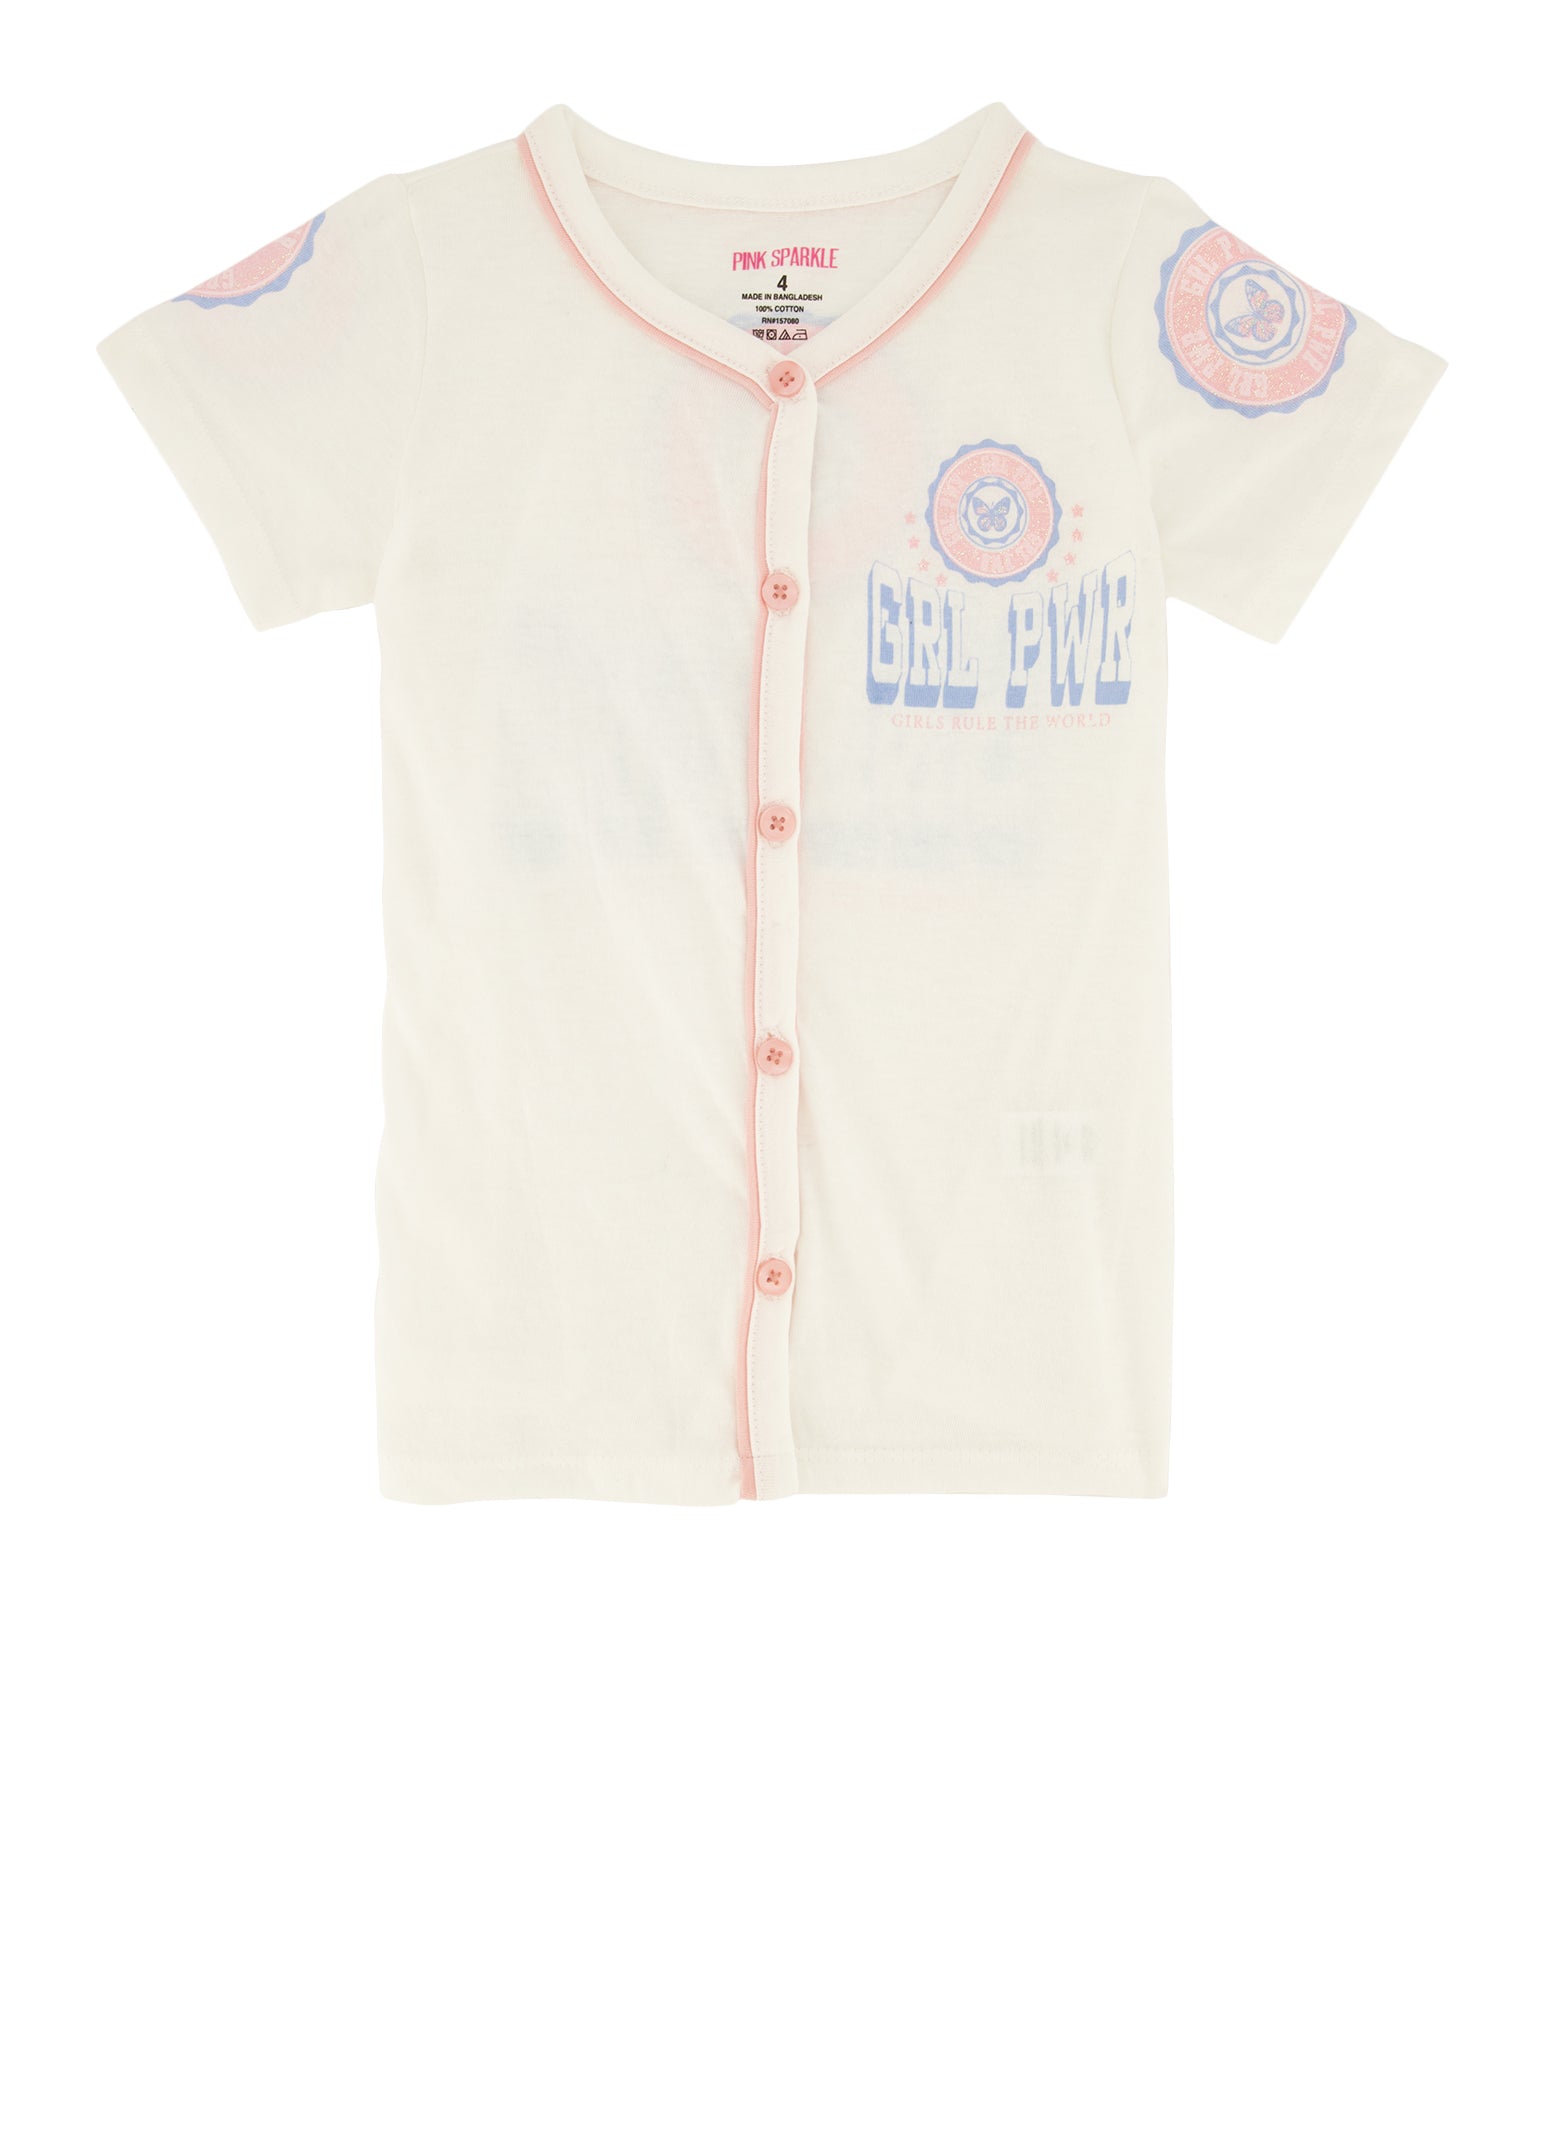 Little Girls Grl Pwr Baseball Top, White, Size 4